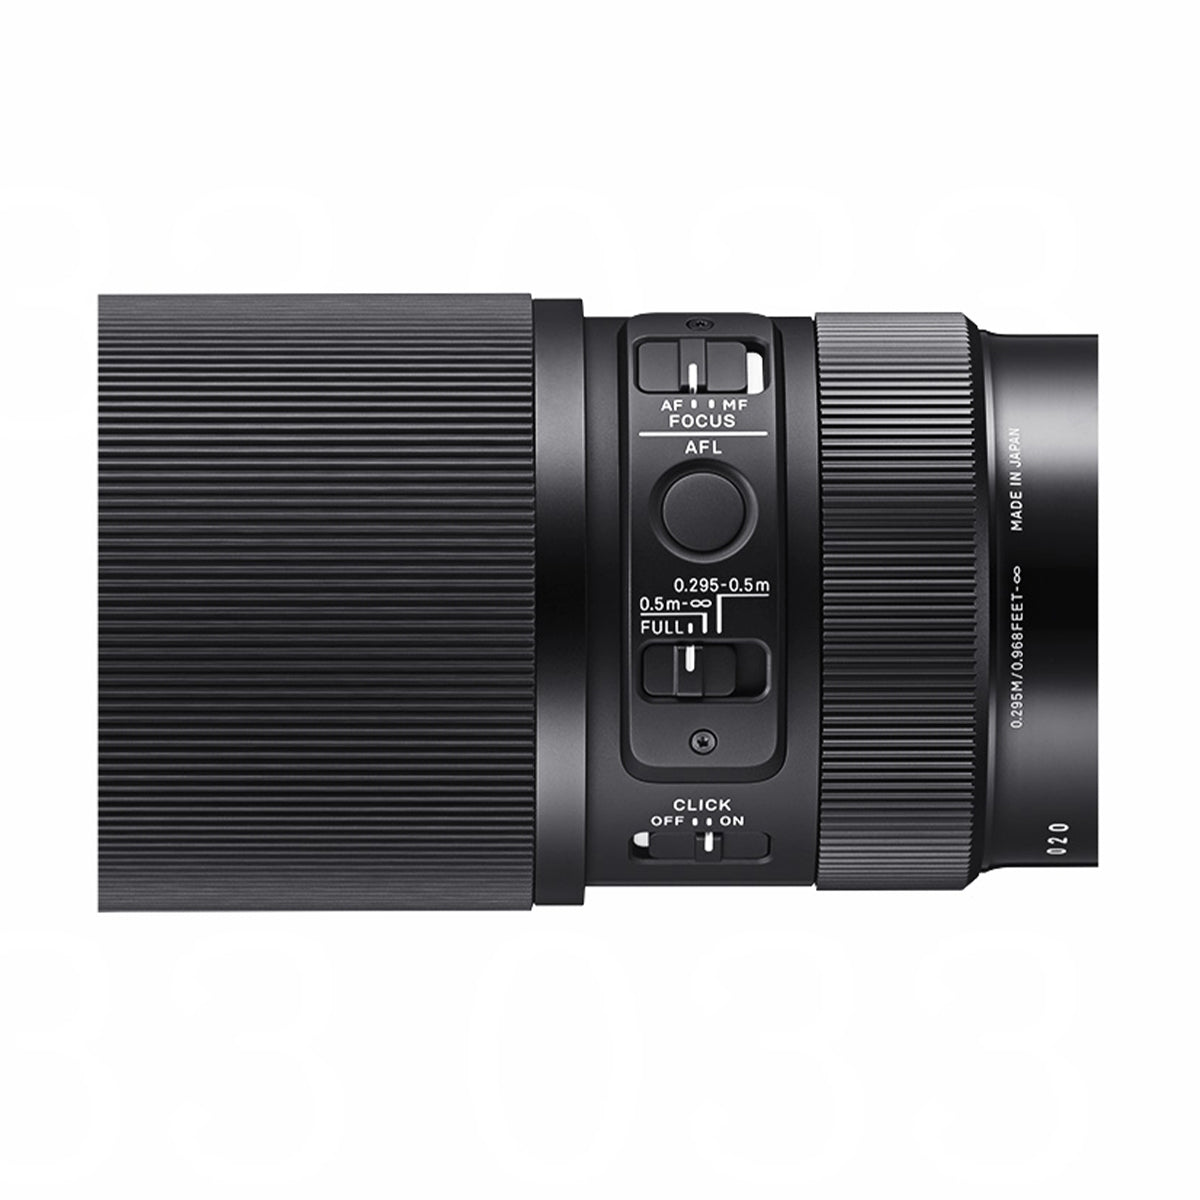 Sigma 105mm f/2.8 DG DN Macro ART Lens for Sony FE